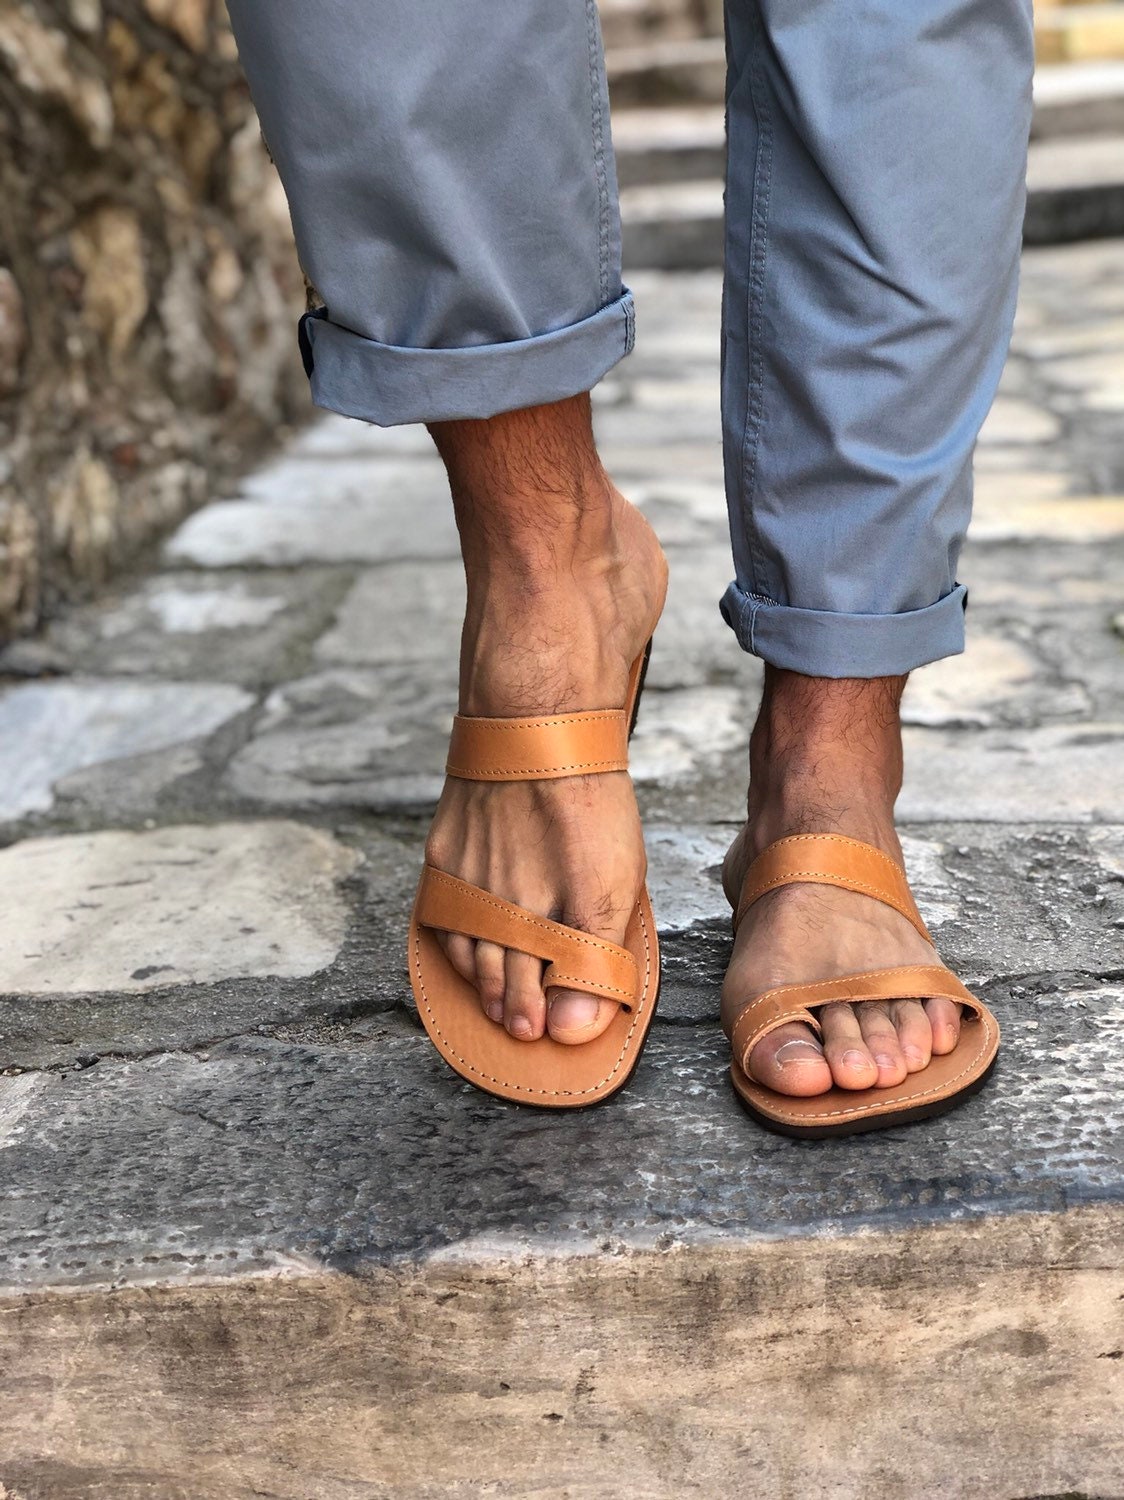 Leather sandal